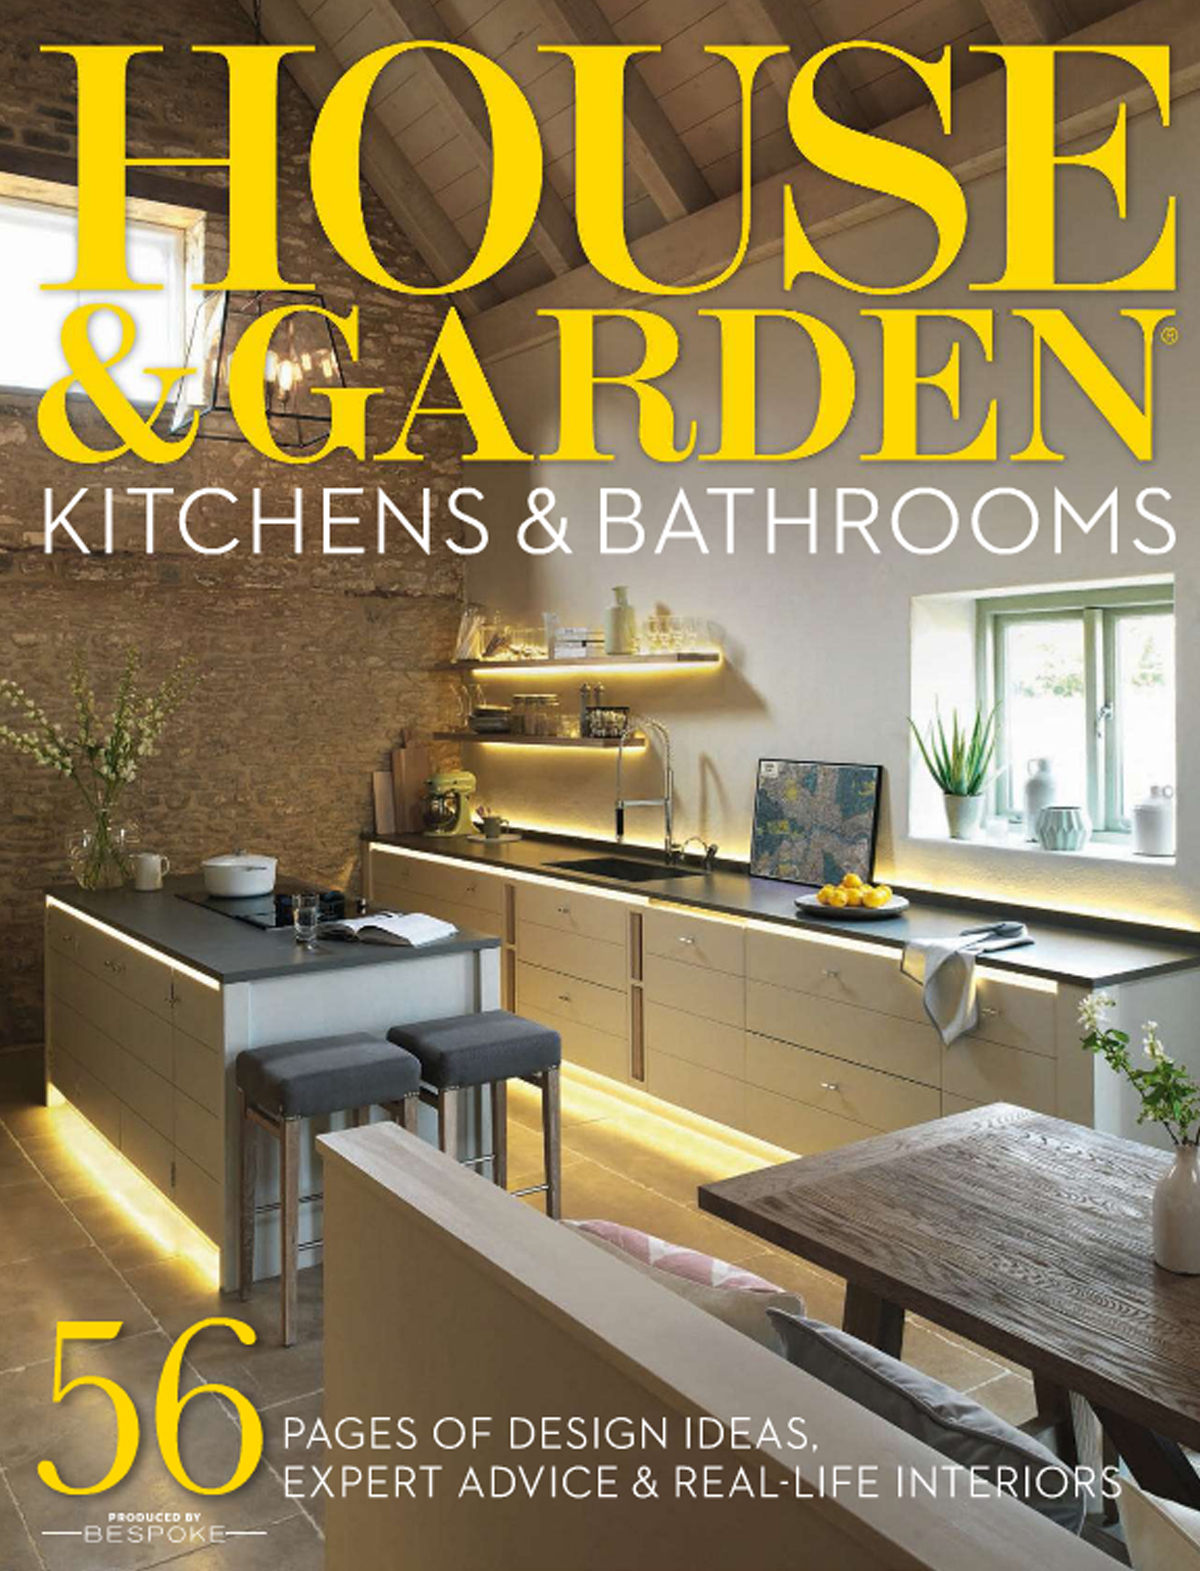 House and garden magazine Kingham bespoke kitchen design feature July 2015